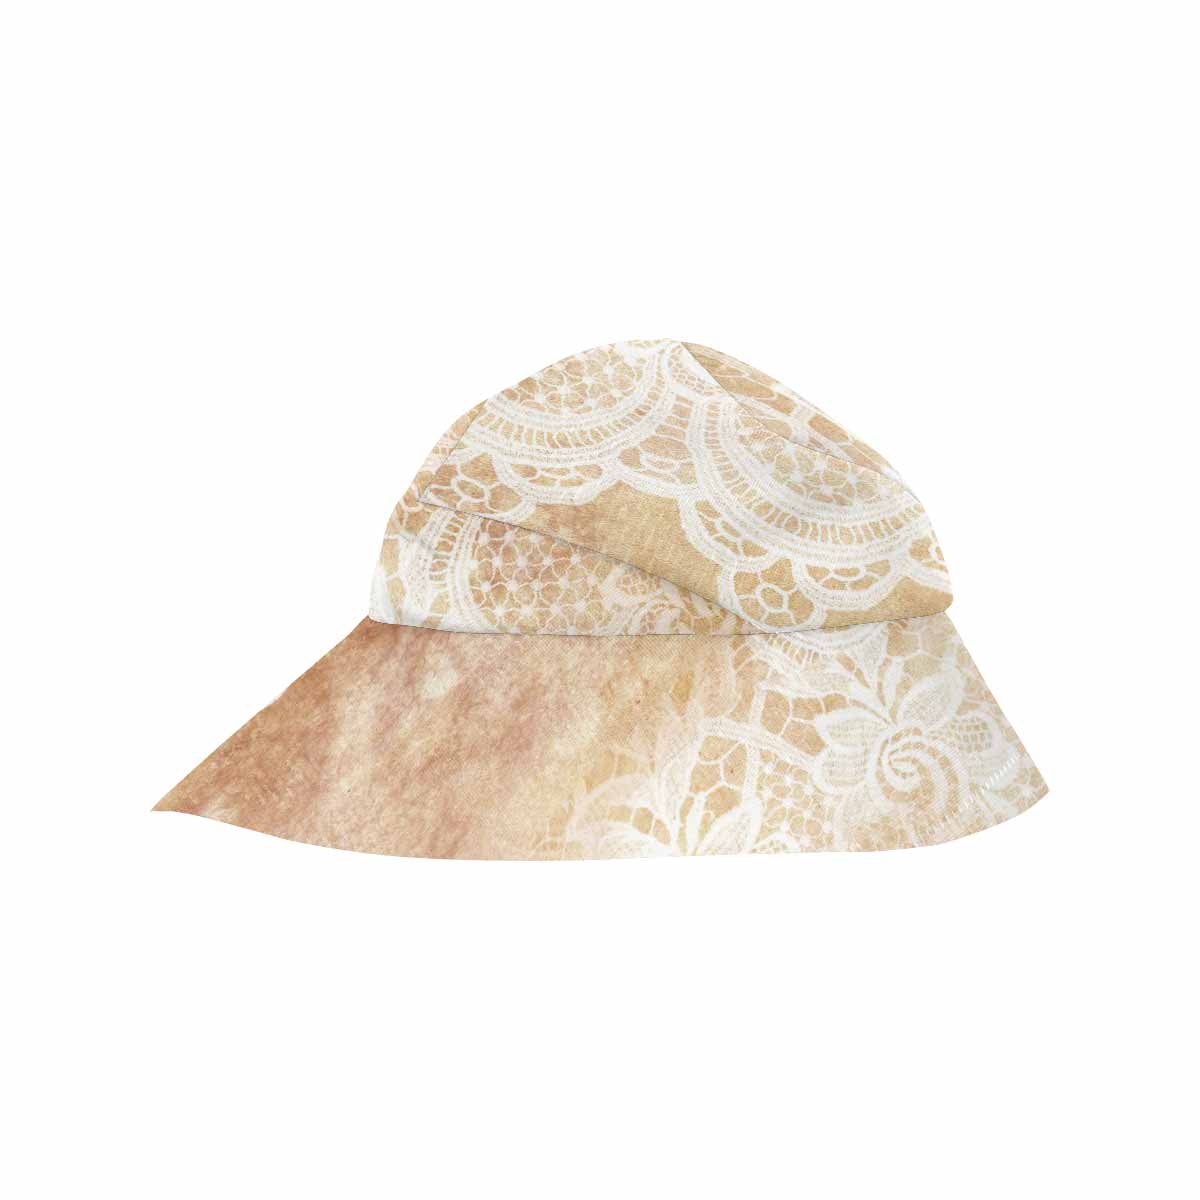 Victorian lace print, wide brim sunvisor Hat, outdoors hat, design 30